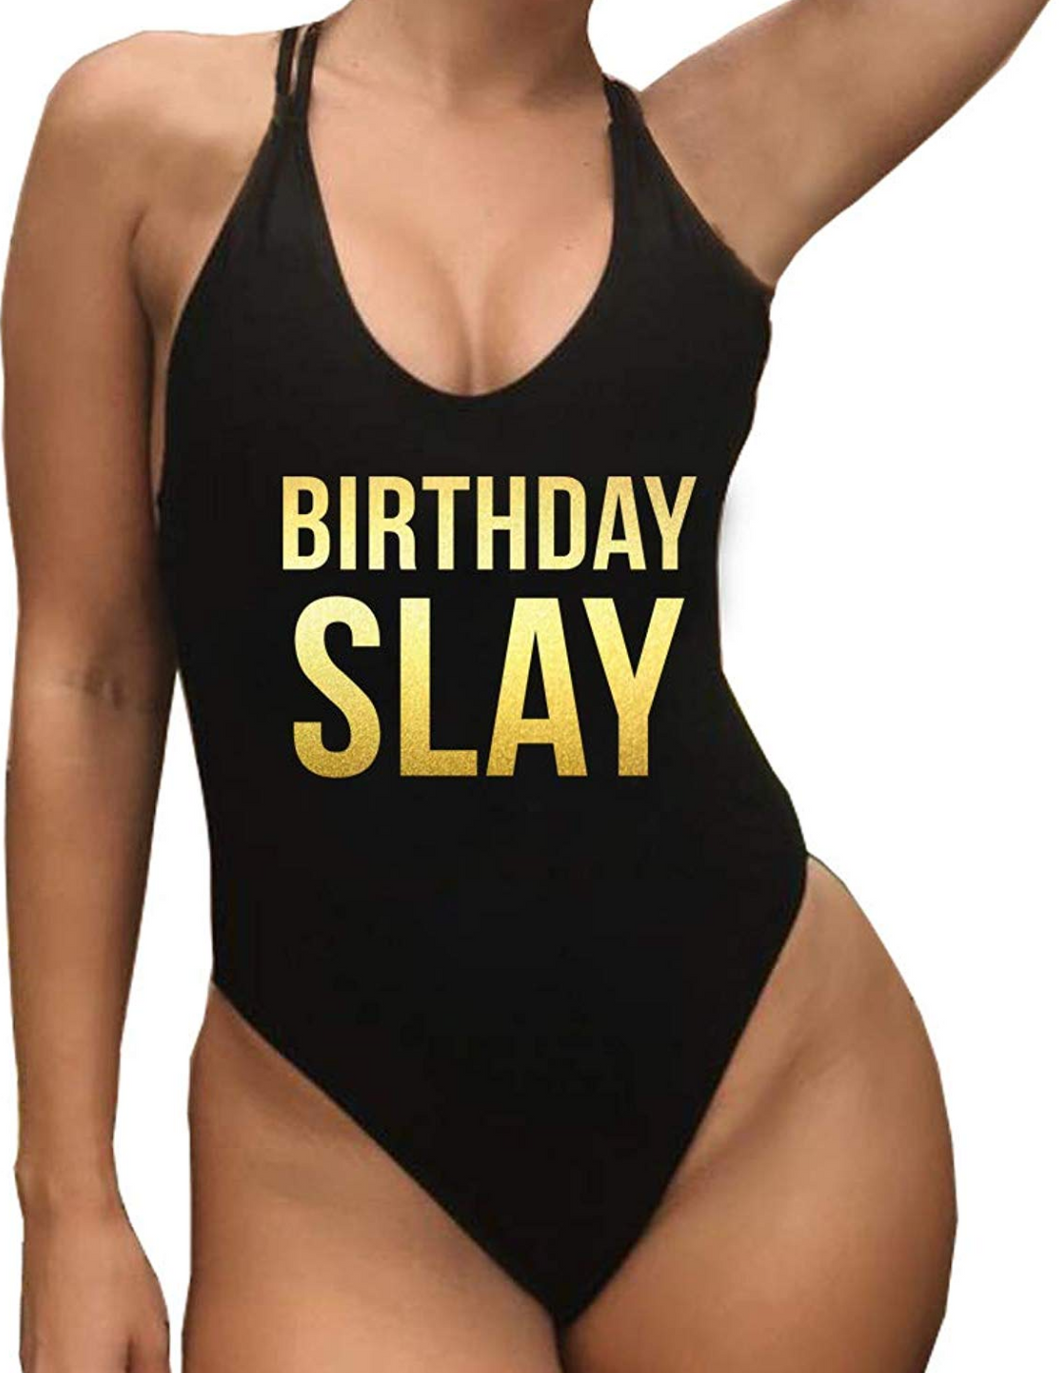 Birthday Slay - black & gold womens 1 piece swimsuit